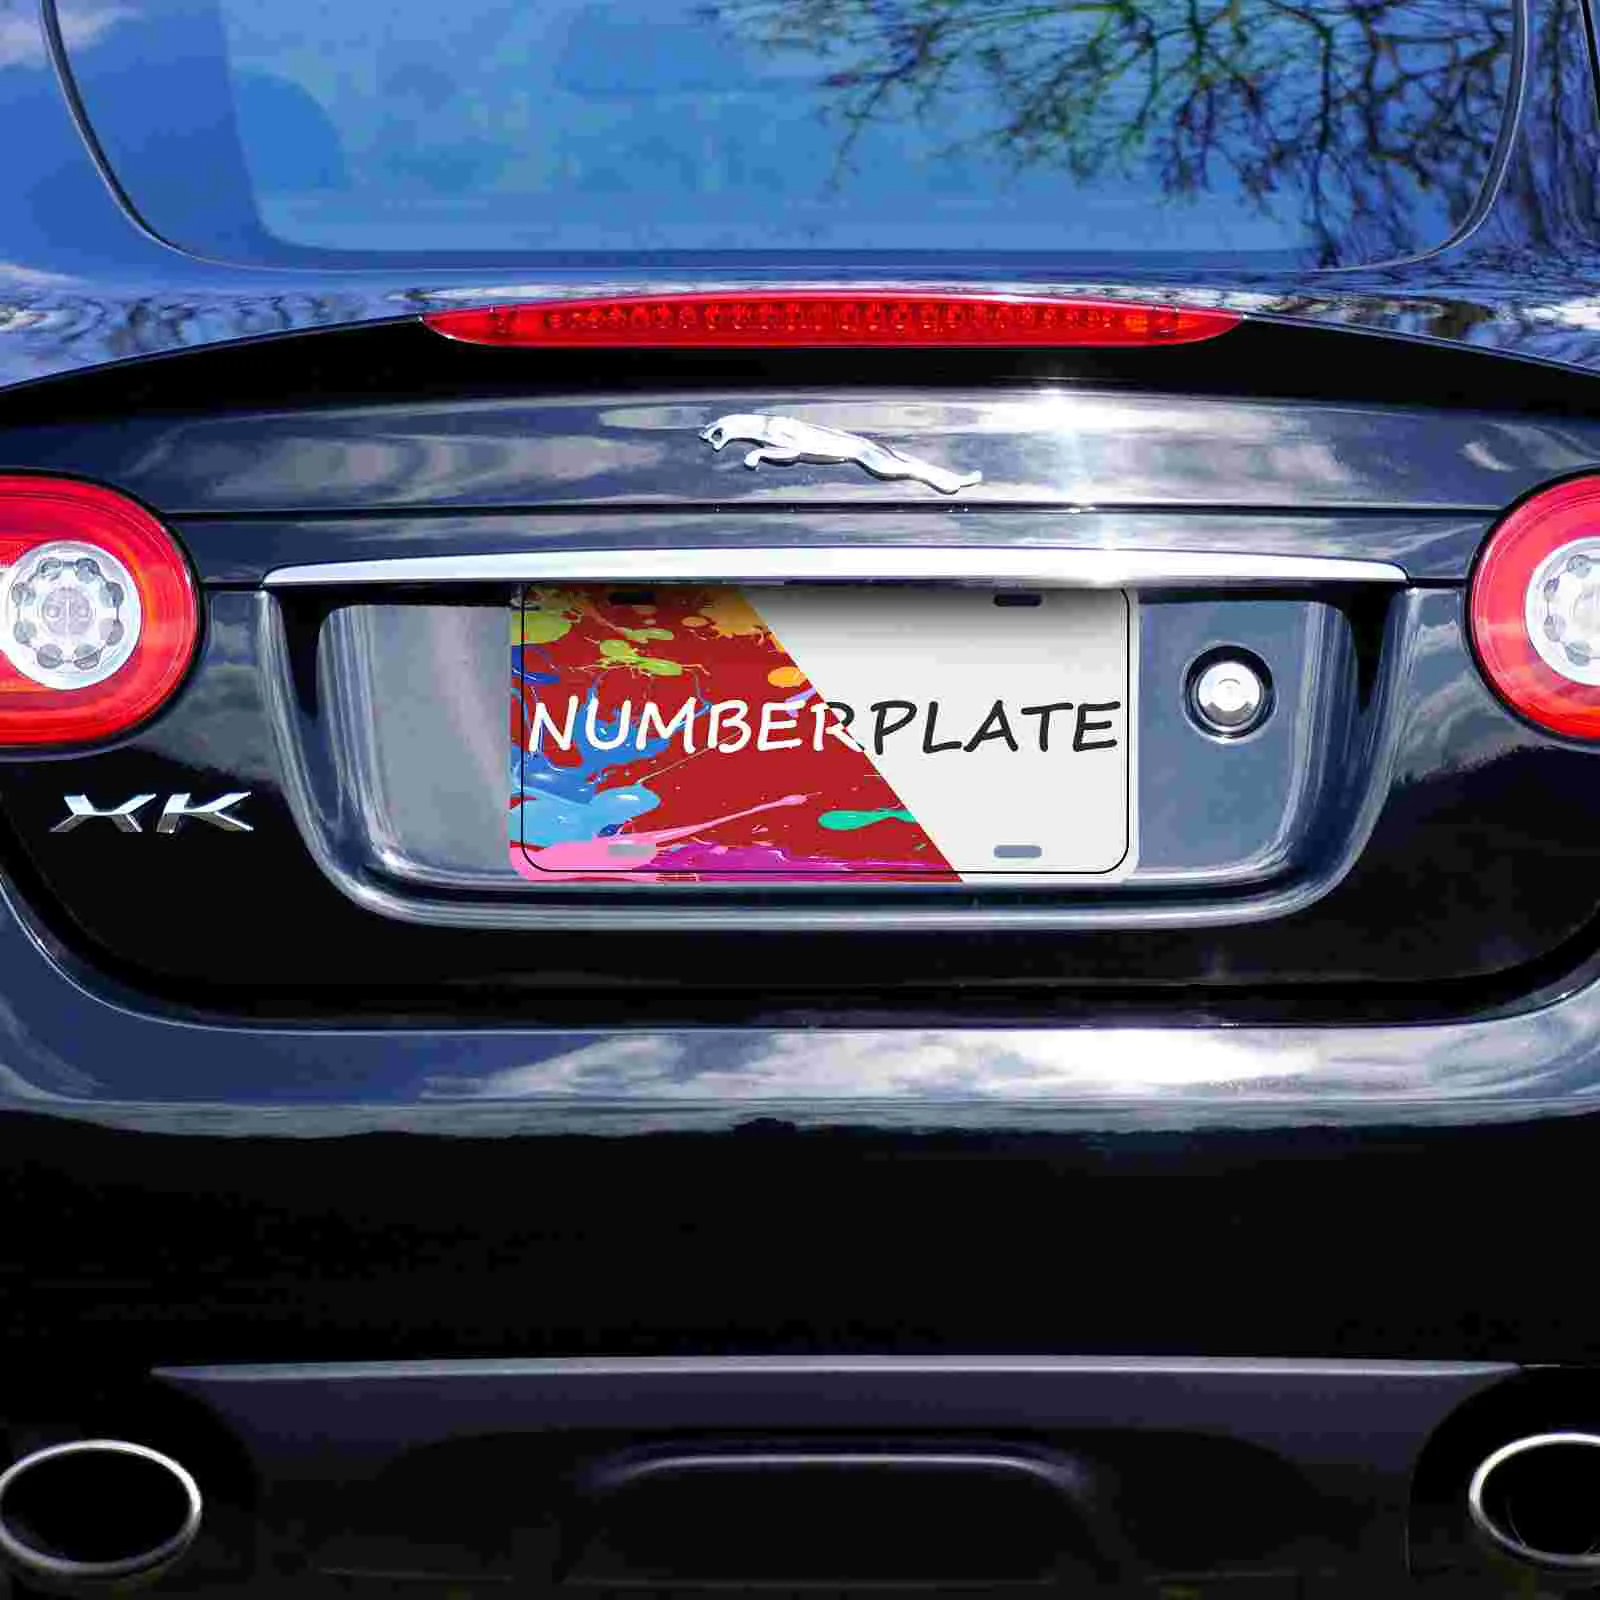 

2 Pcs Blank License Plate Sublimation Blanks Single Sided Plates Vinyl Front Car Aluminum Registration Cars